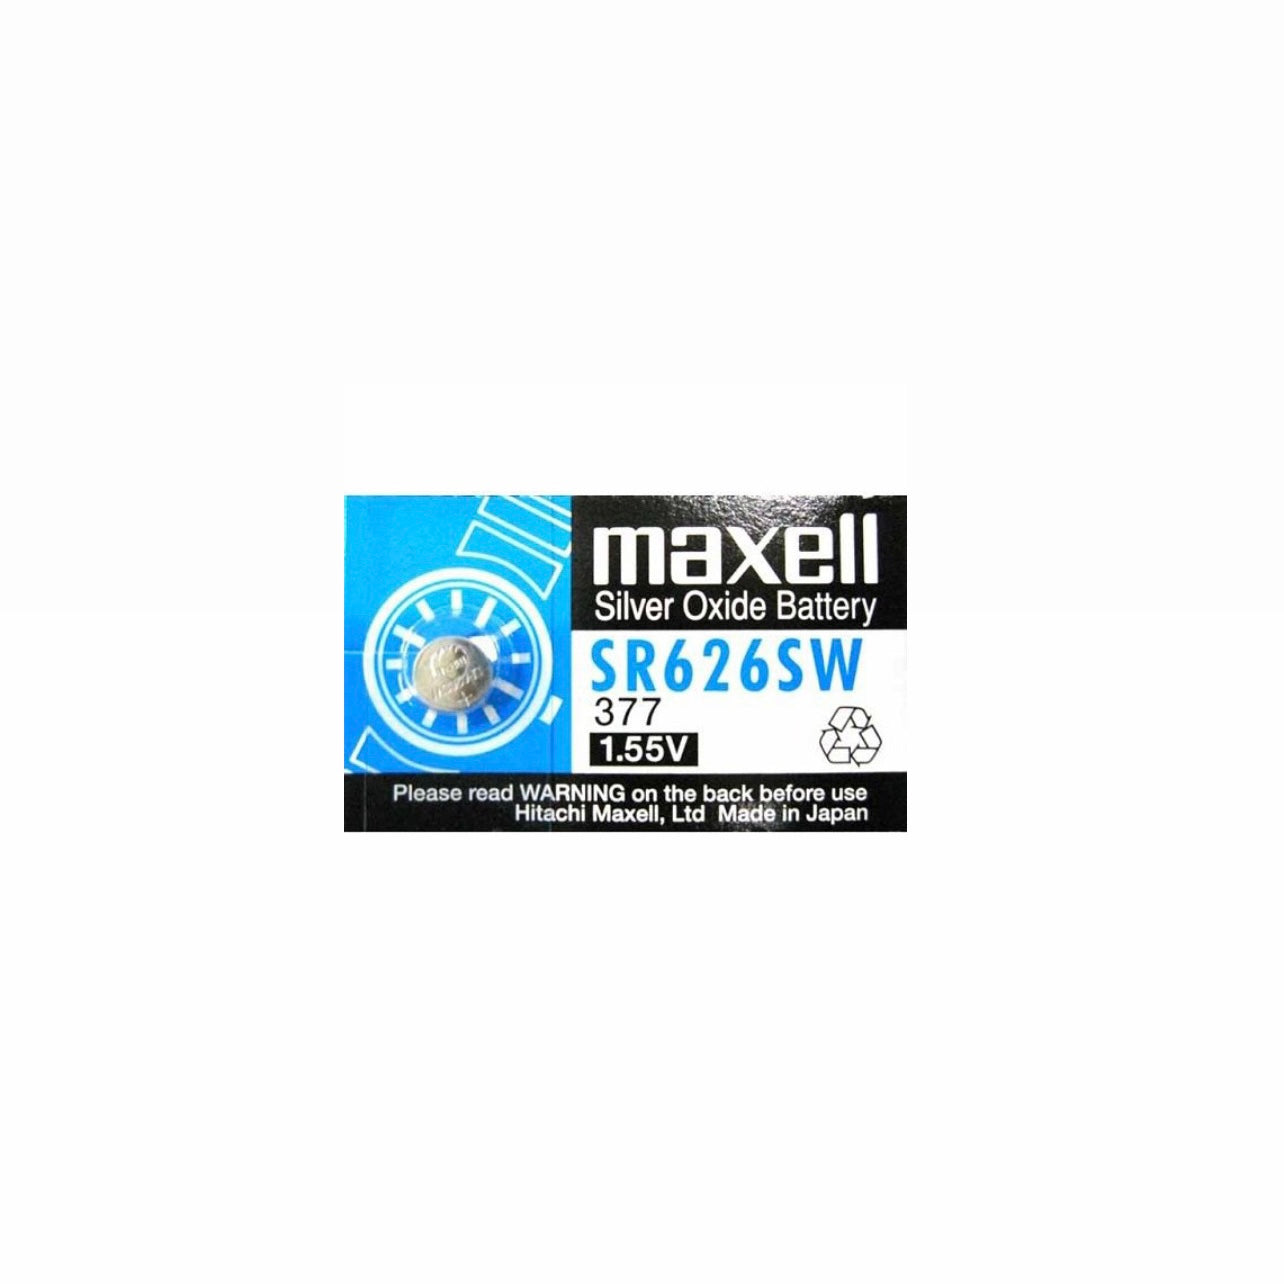 Maxell Silver Oxide Battery (SR626SW)